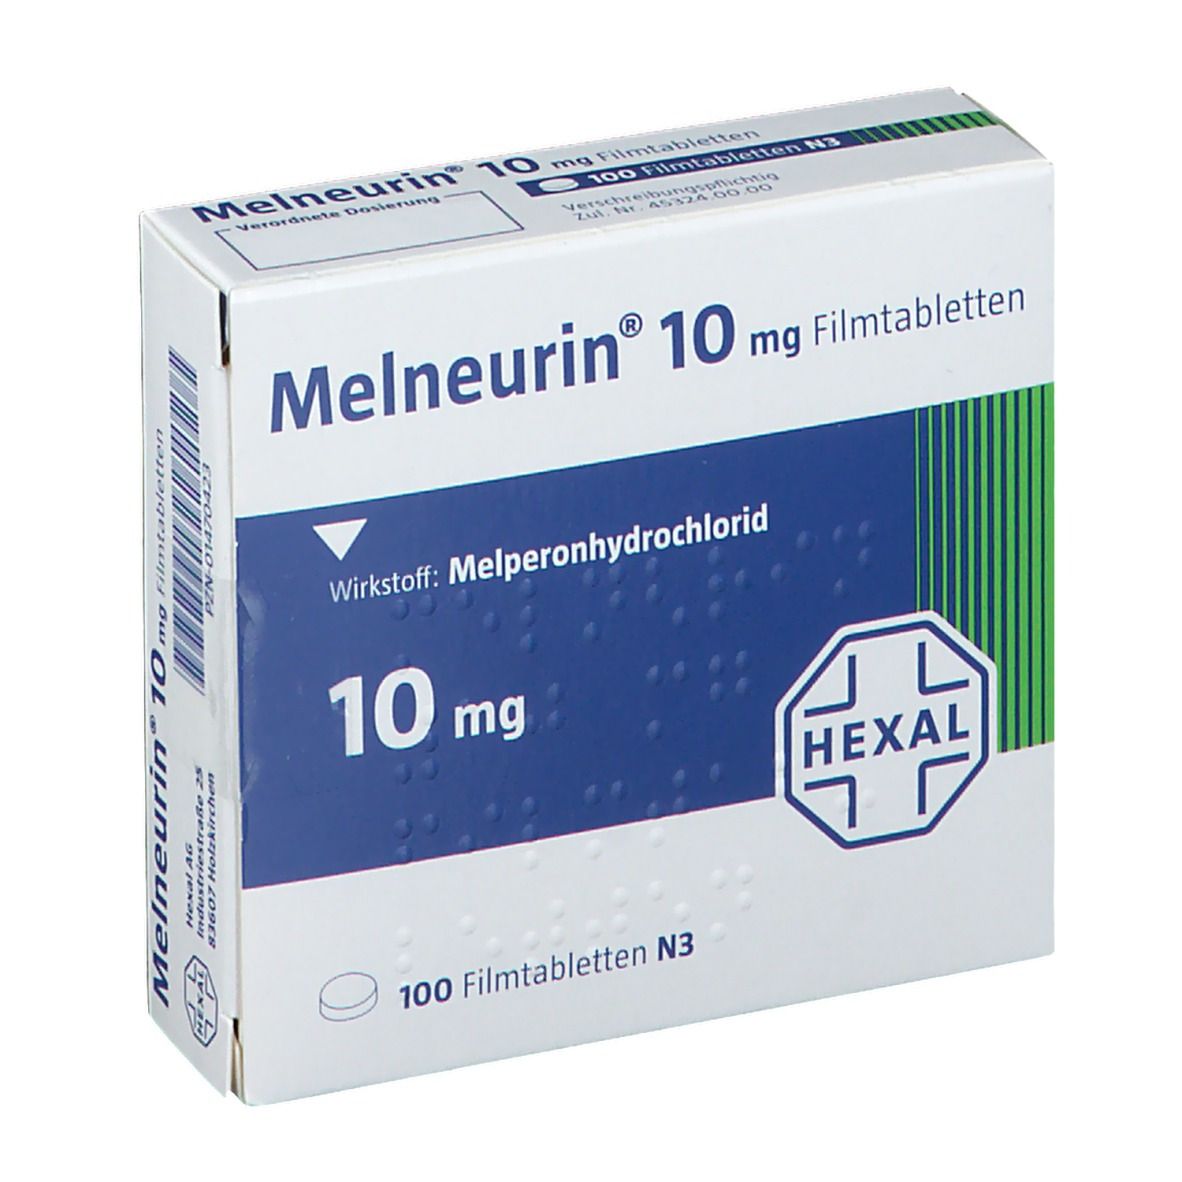 Melneurin® 10 mg